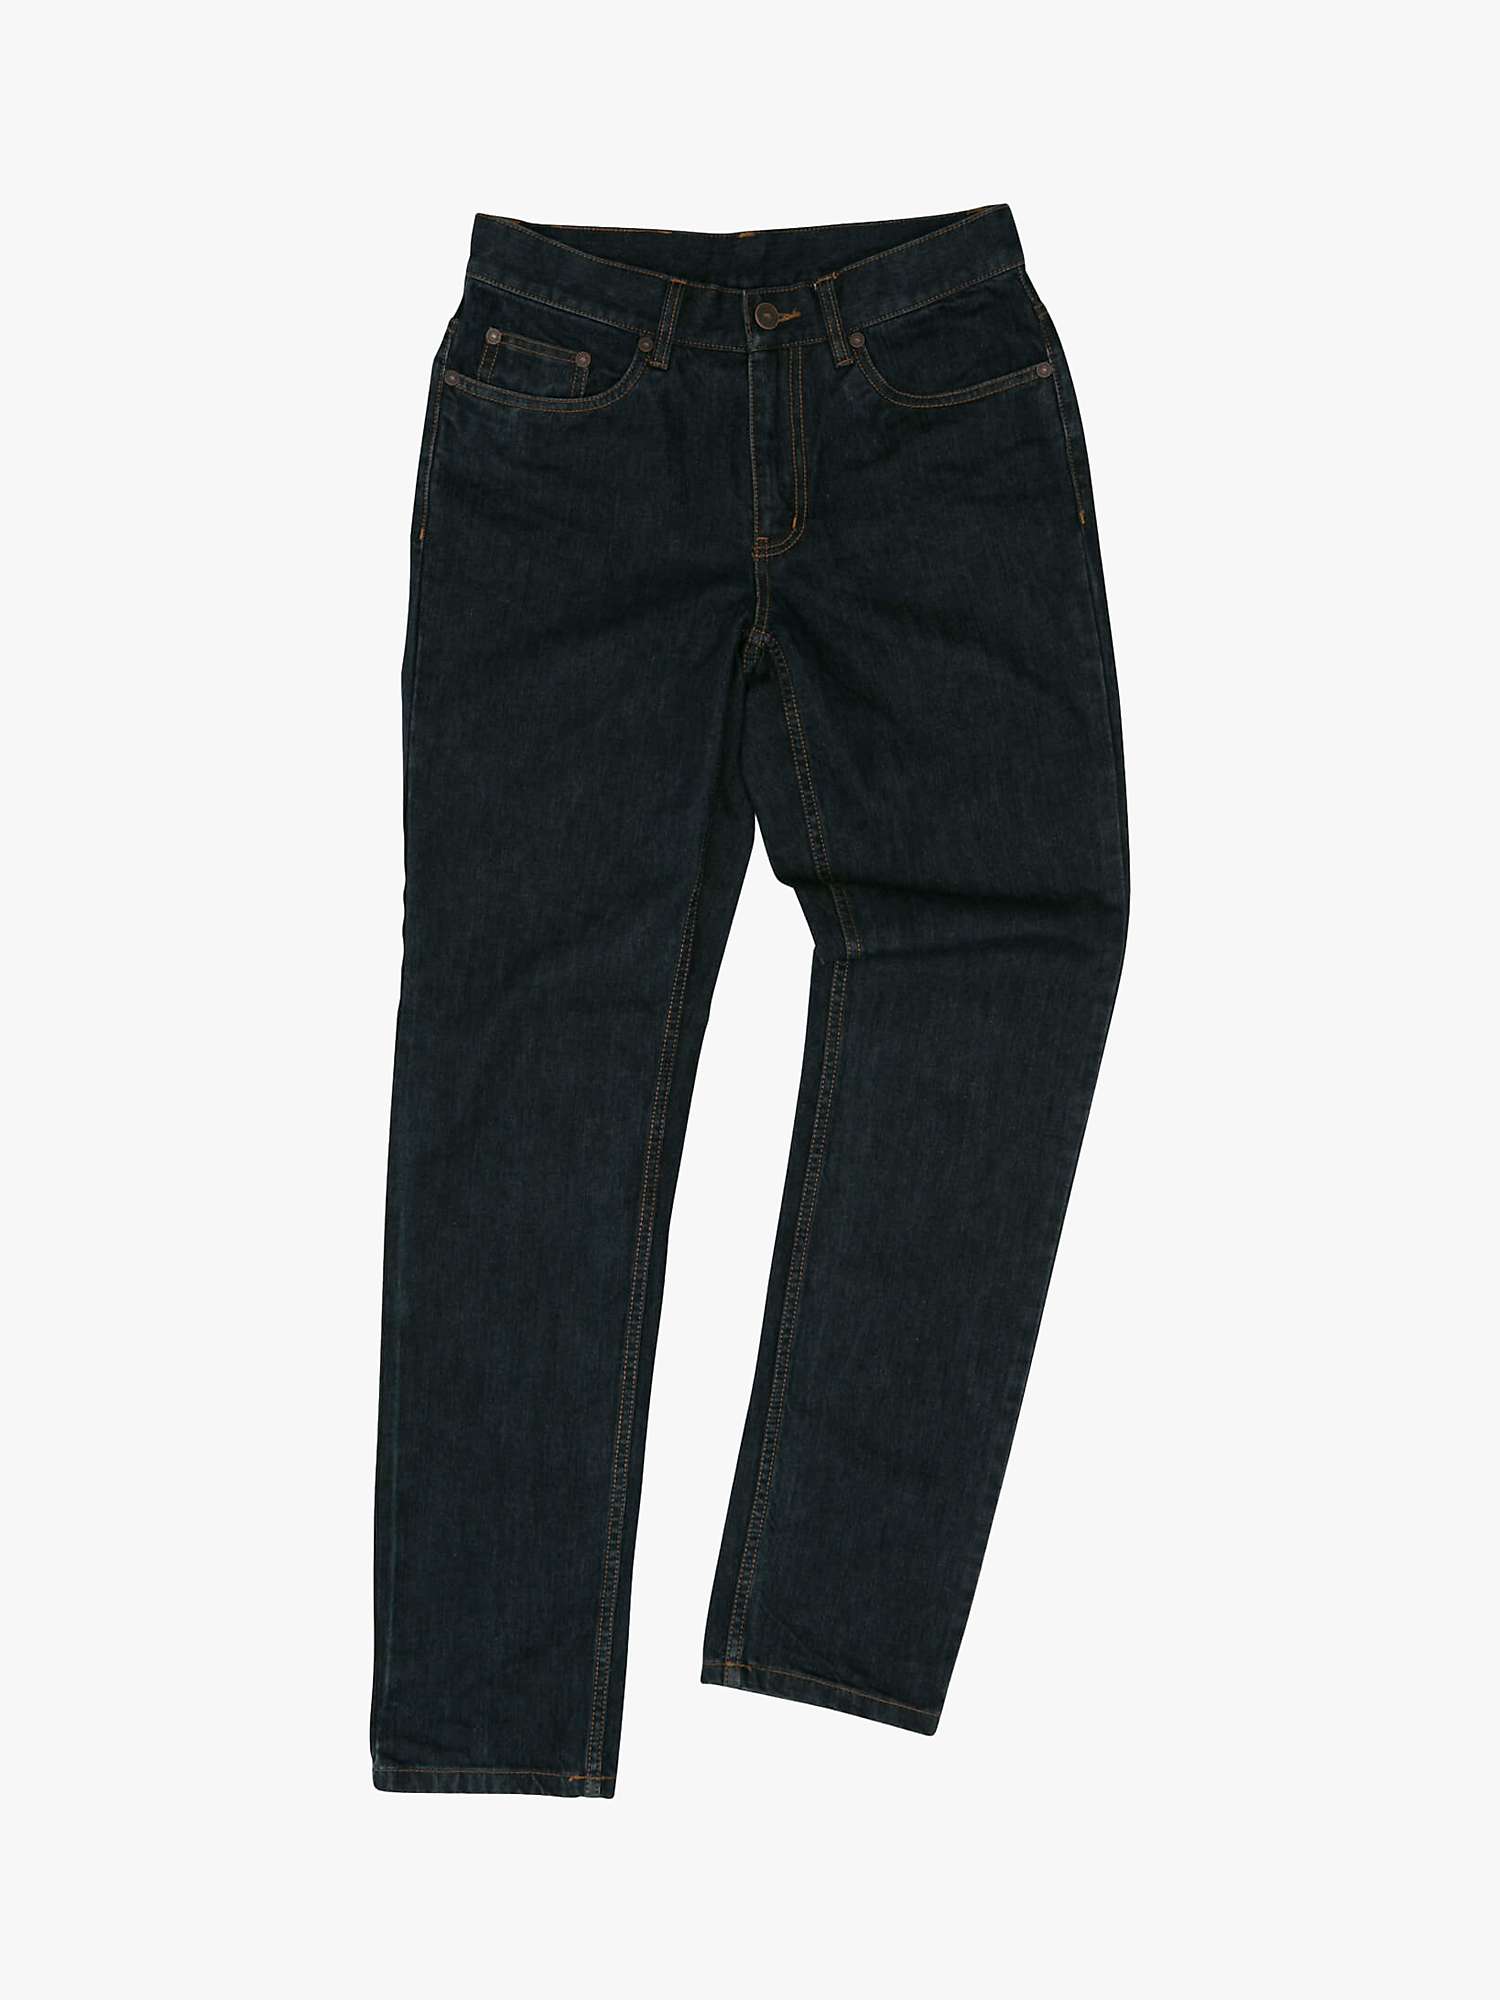 Buy Raging Bull Tapered Jeans Online at johnlewis.com